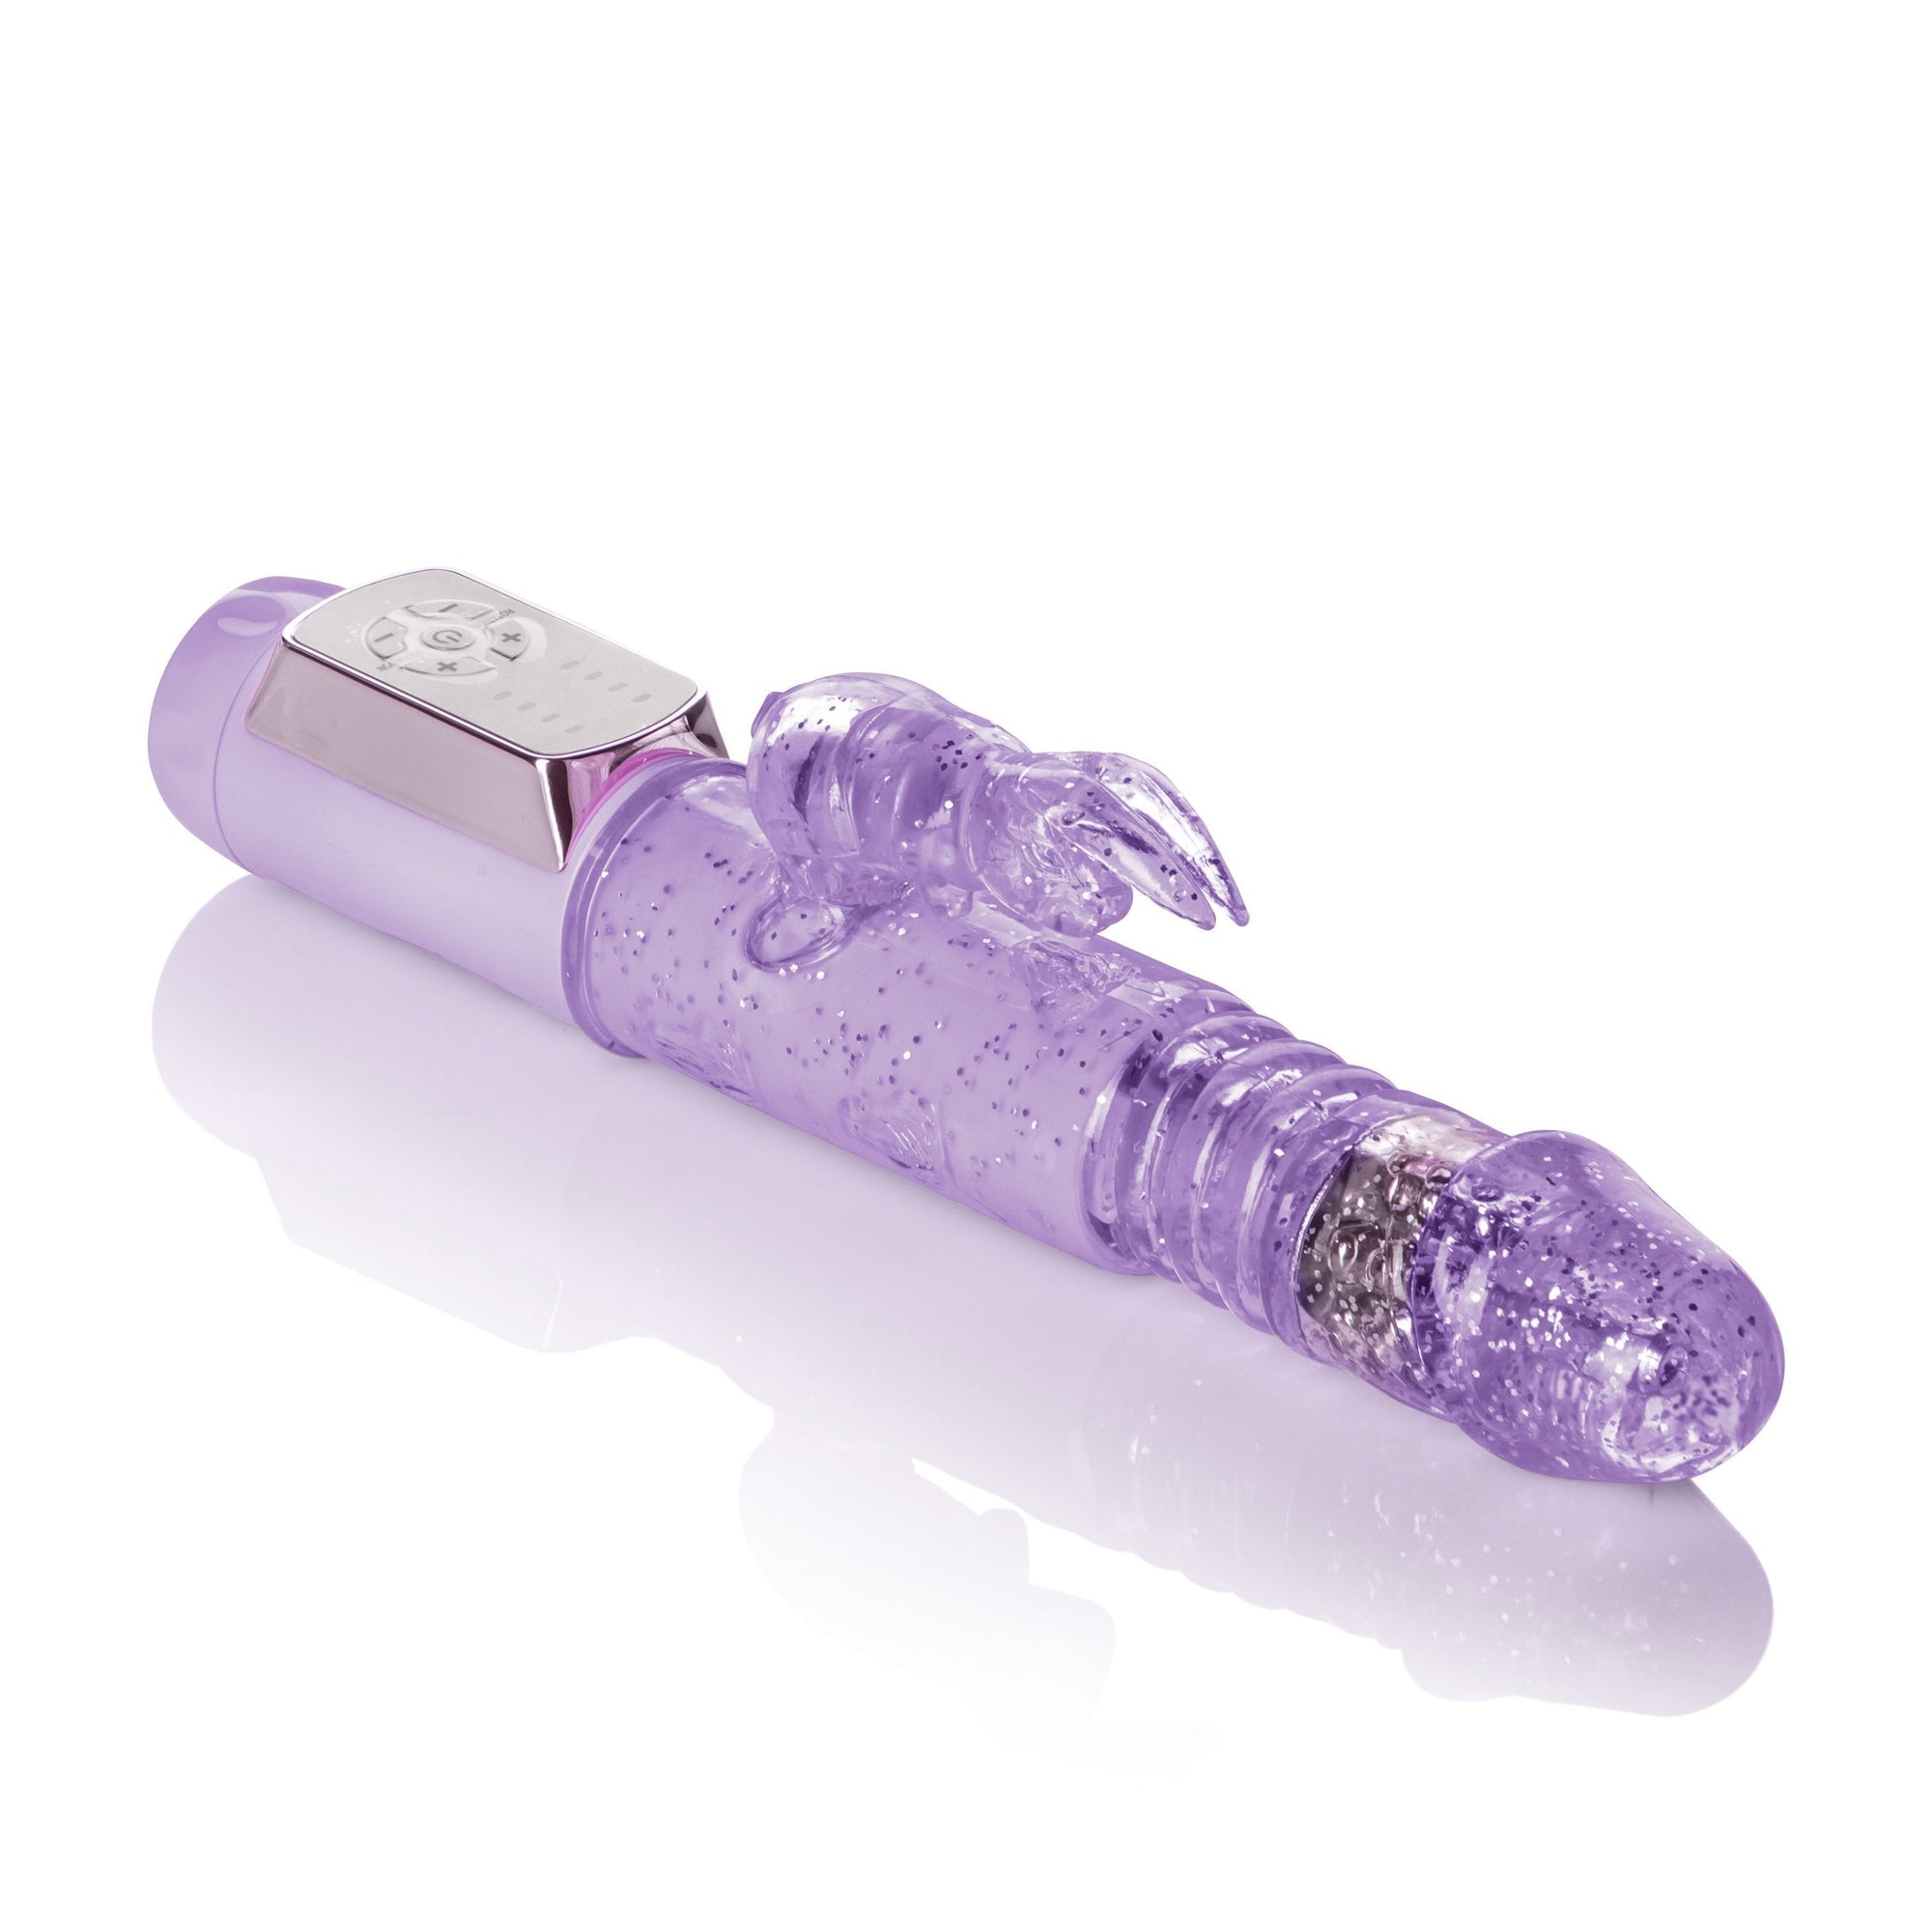 California Exotics - Petite Thrusting Jack Rabbit Intermediate Vibrator (Purple) -  Rabbit Dildo (Vibration) Non Rechargeable  Durio.sg